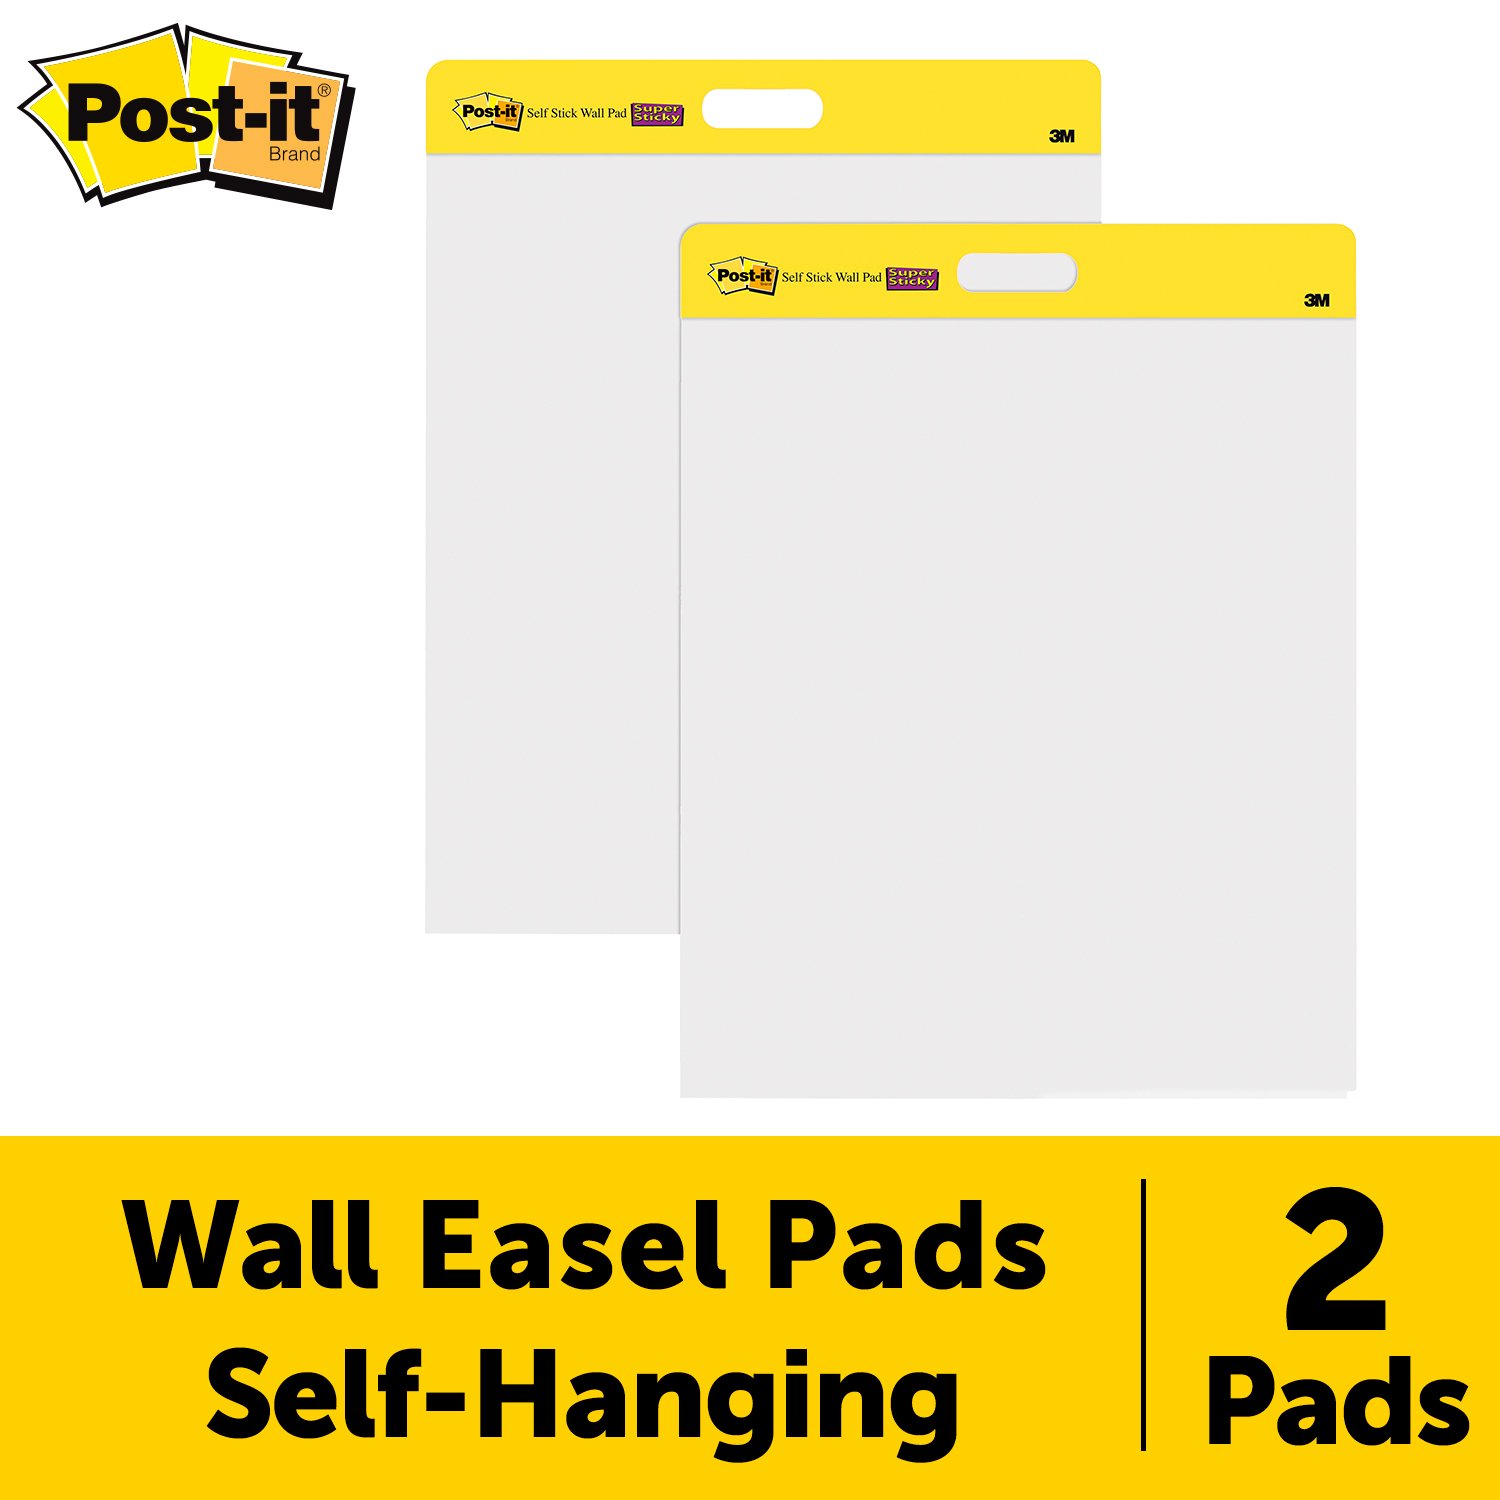 7000047563 - Post-it Self-Stick Wall Pad 566, 20 in x 23 in (50.8 cm x 58.4 cm)